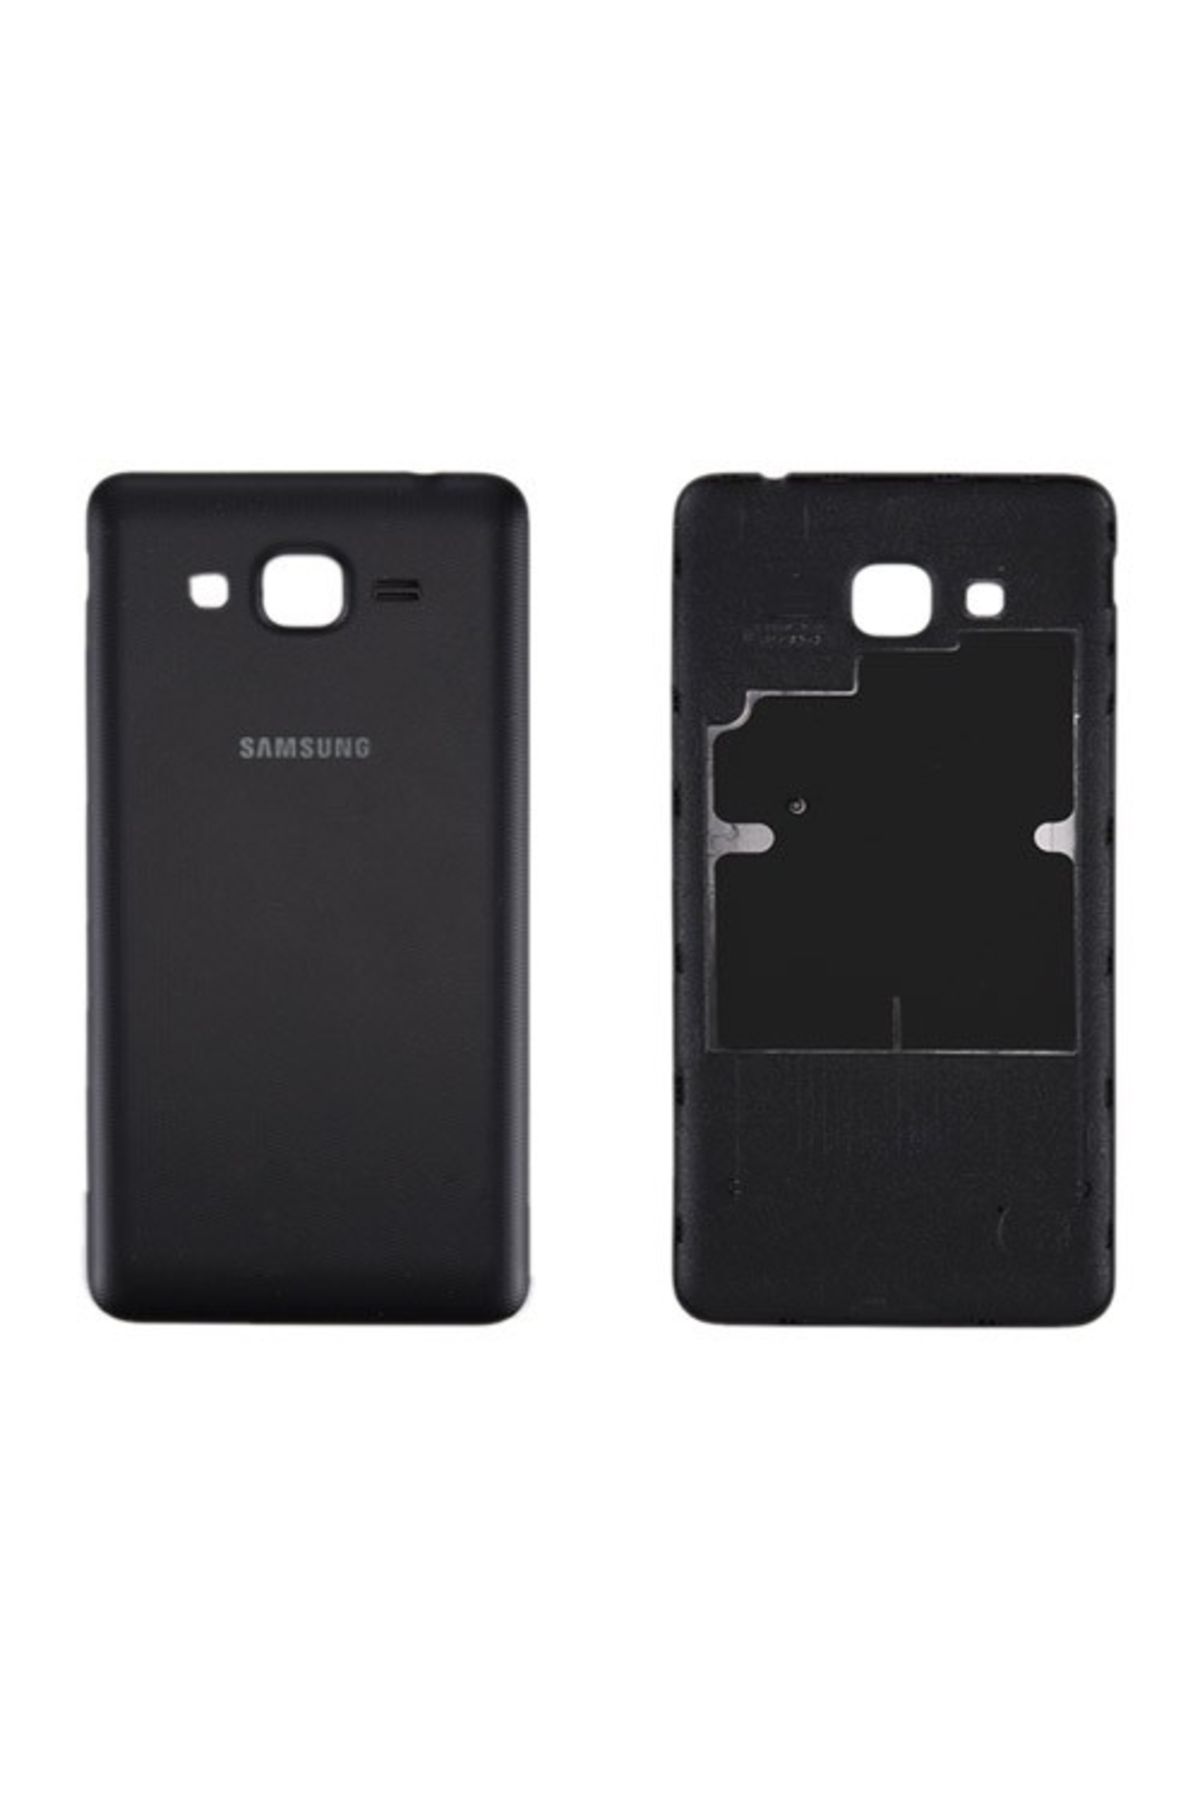 Beruflic Samsung Galaxy Grand Prime Plus G532 Batarya Pil Kapağı